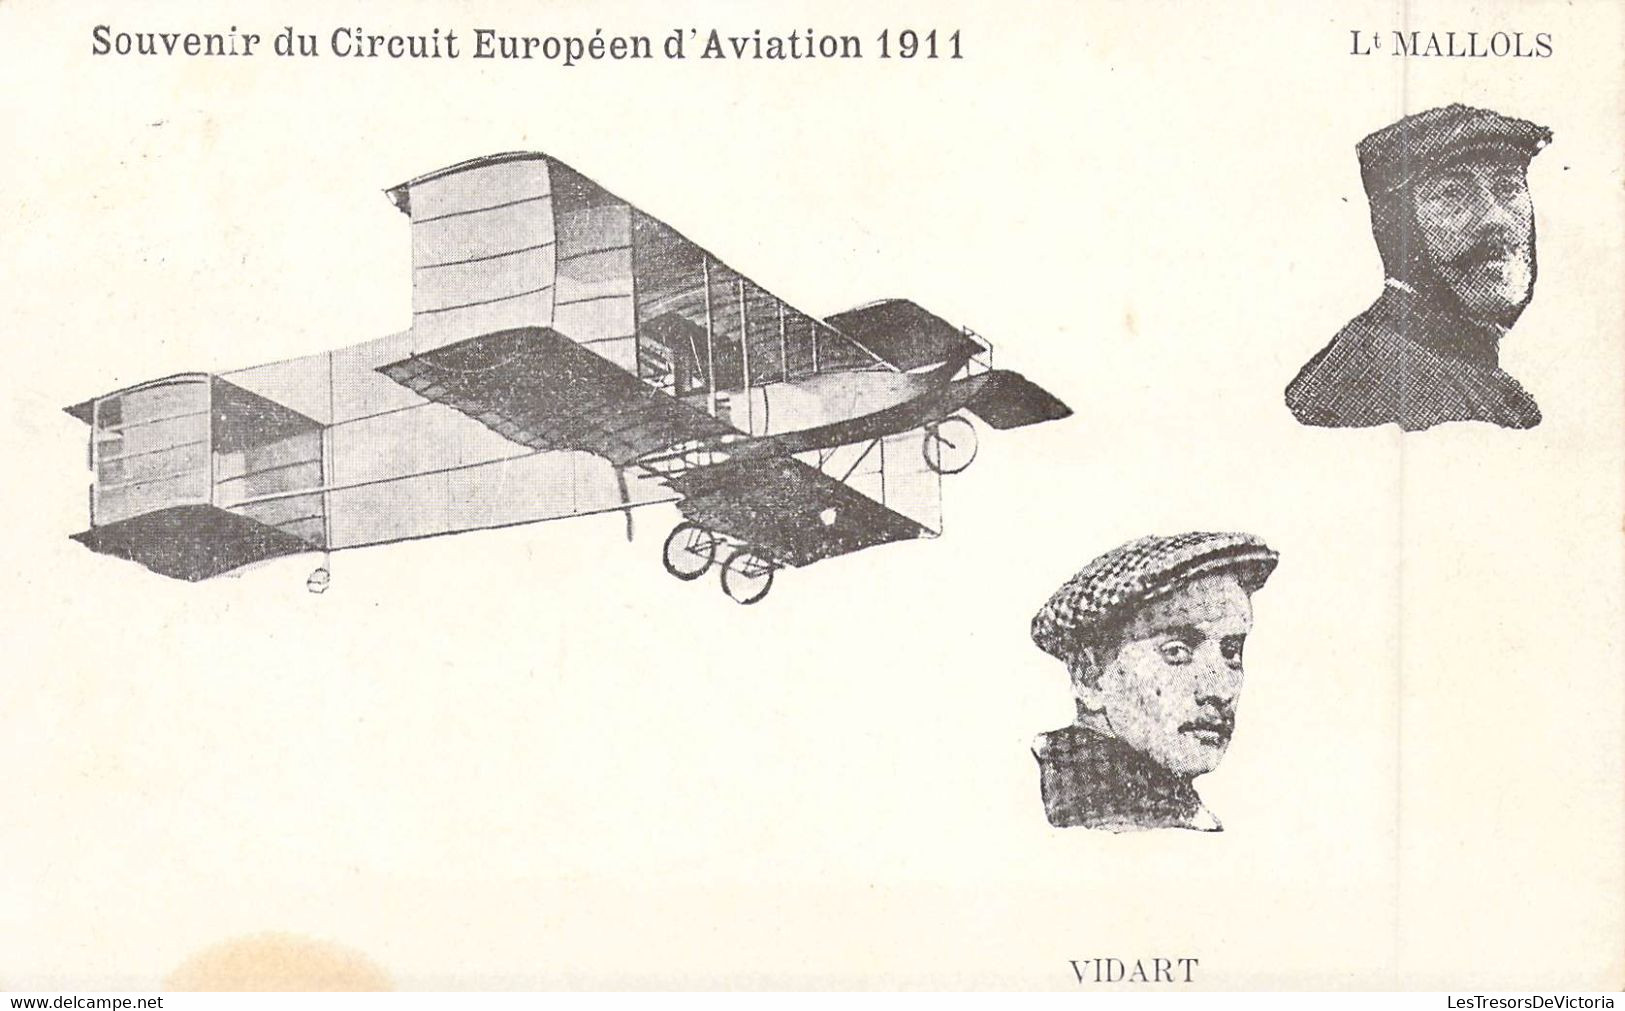 Aviateur - Aviation - Souvenirs Du Circuit D'aviation 1911 - Lt Mallols - Mr Vidart - Carte Postale Ancienne - Piloten